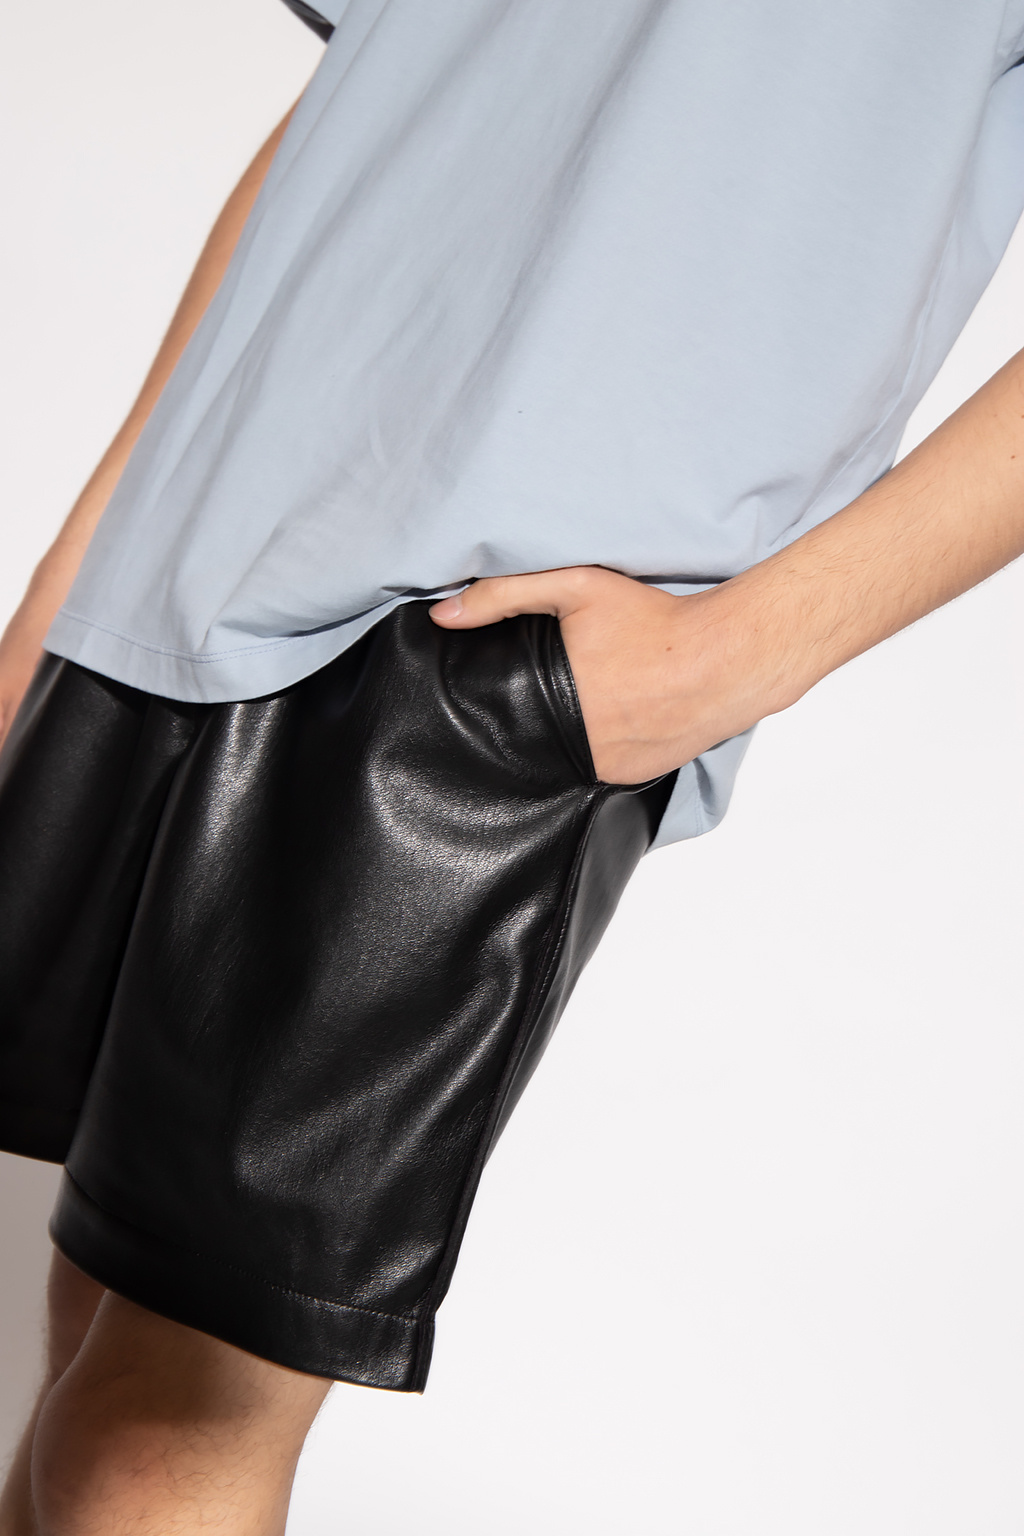 Nanushka ‘Doxxi’ shorts in vegan leather